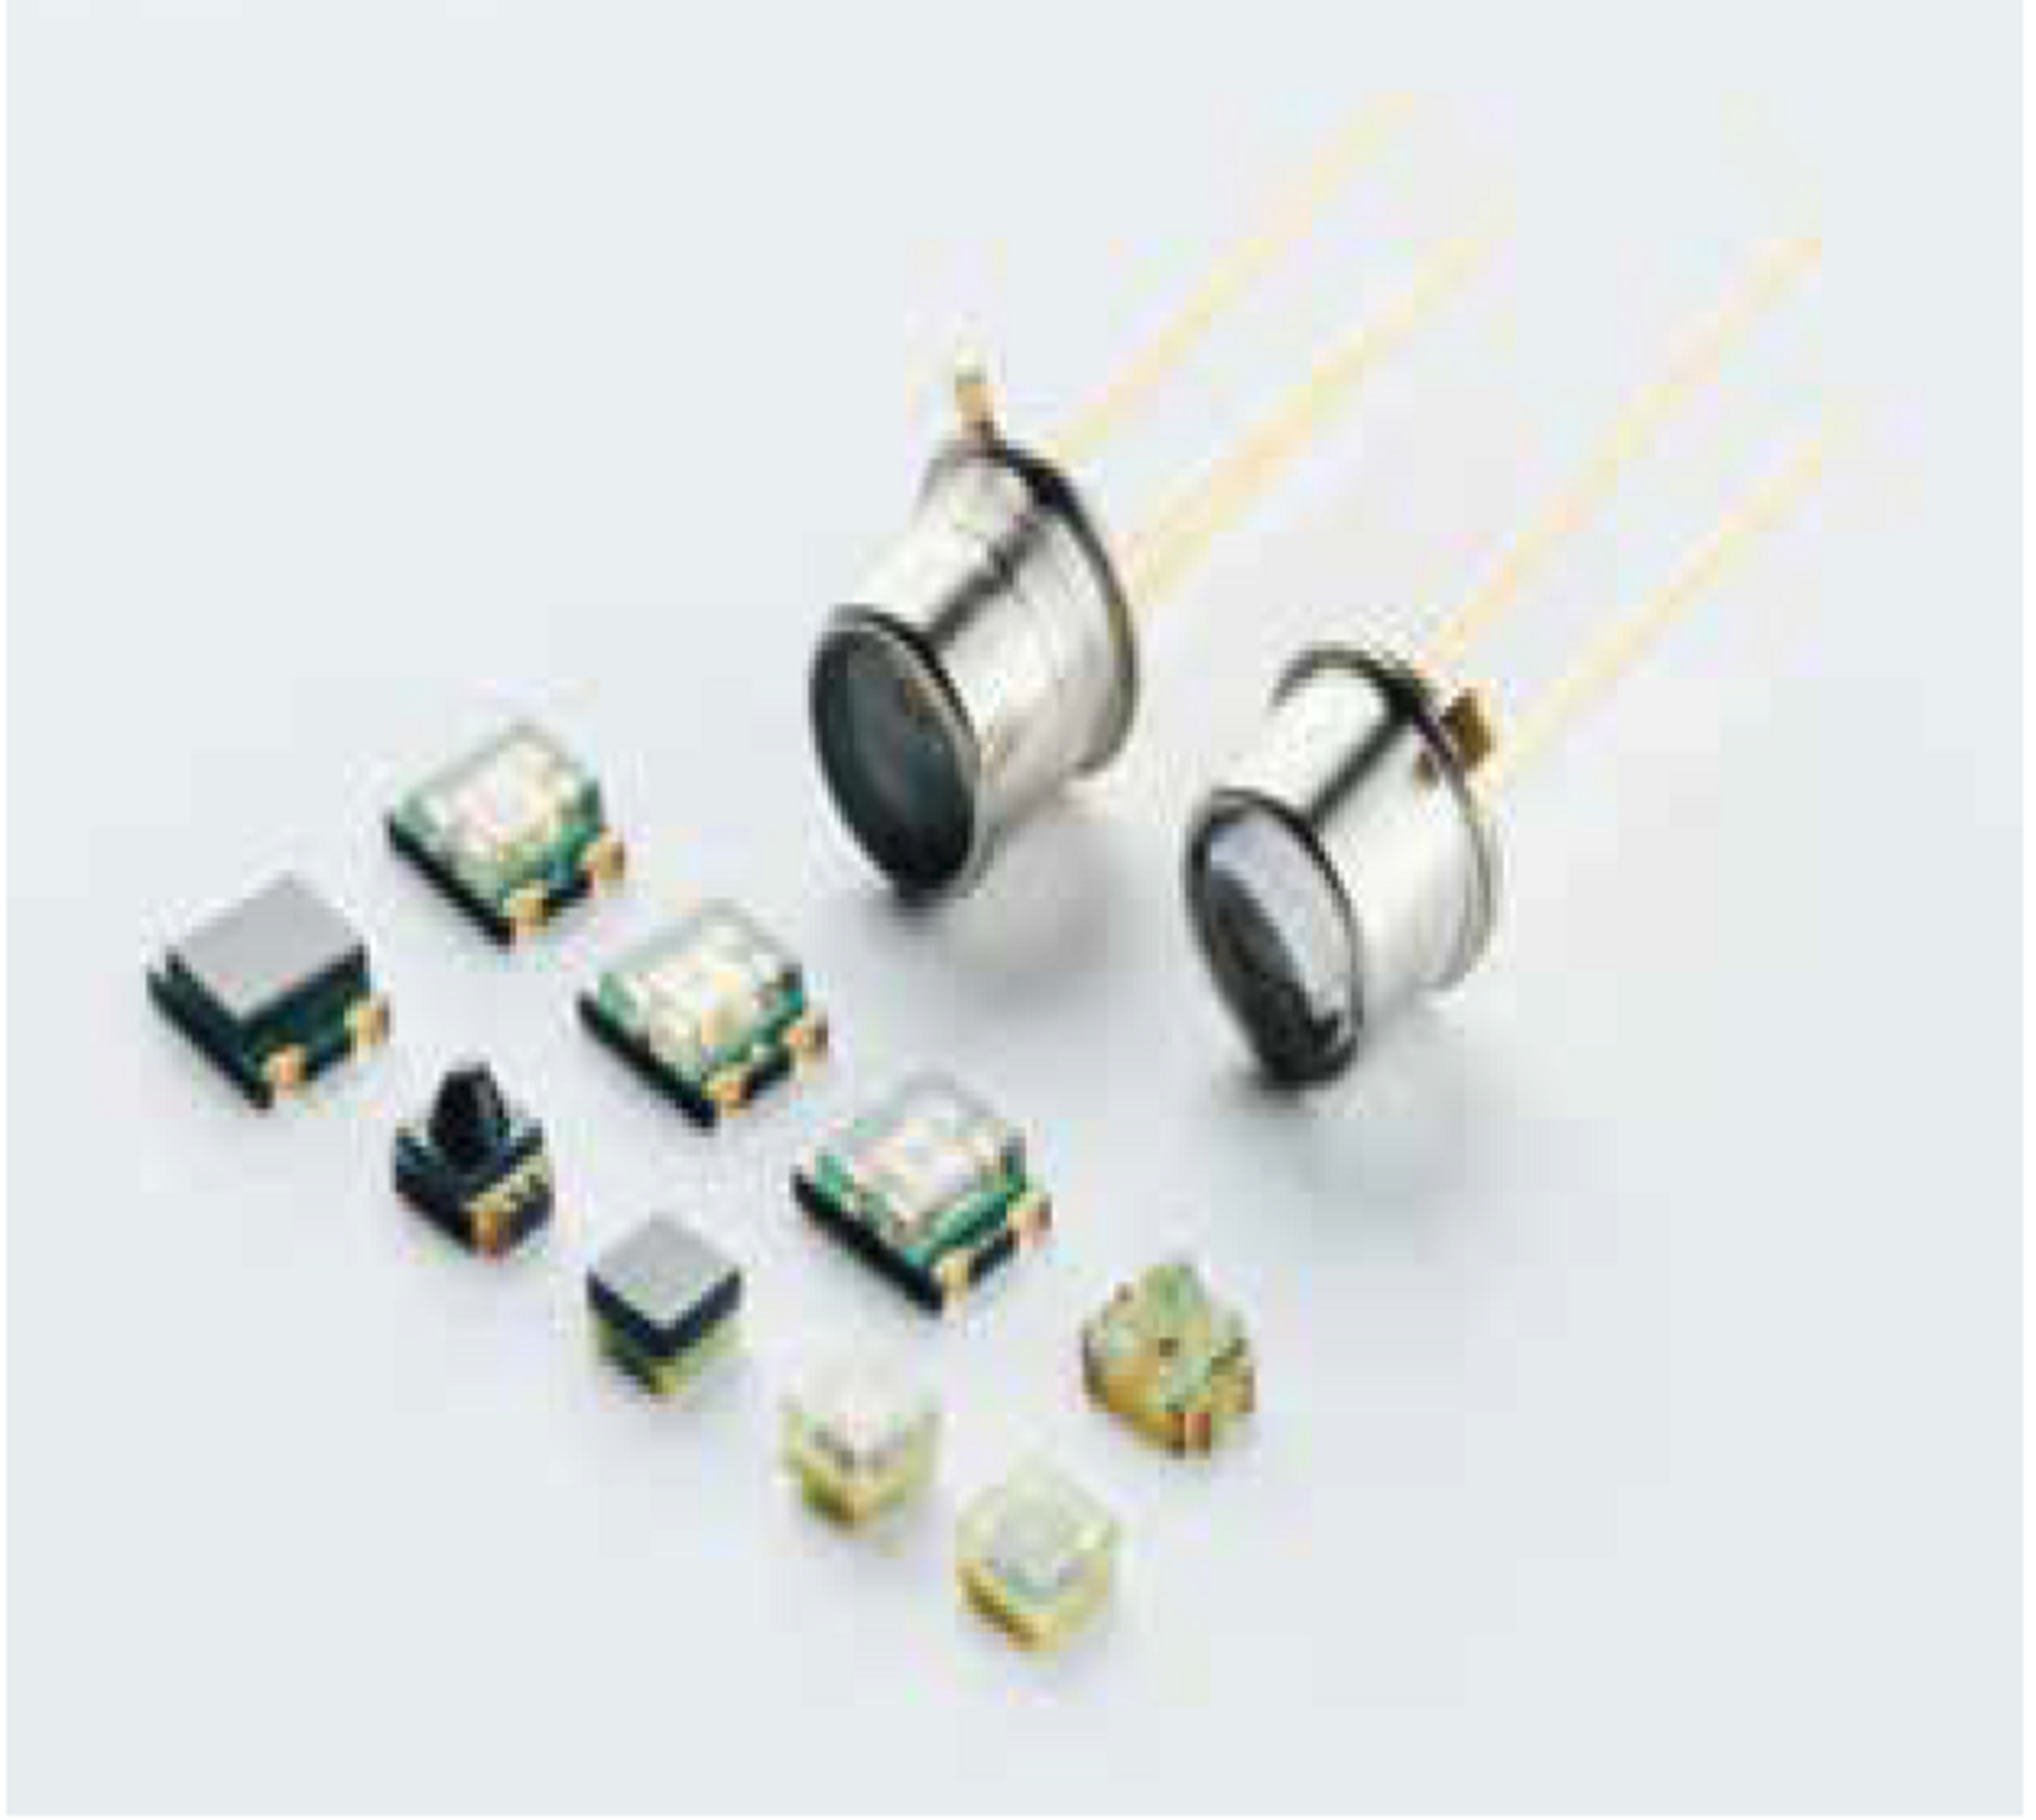 LED, Photo Diode, Photo Transistor